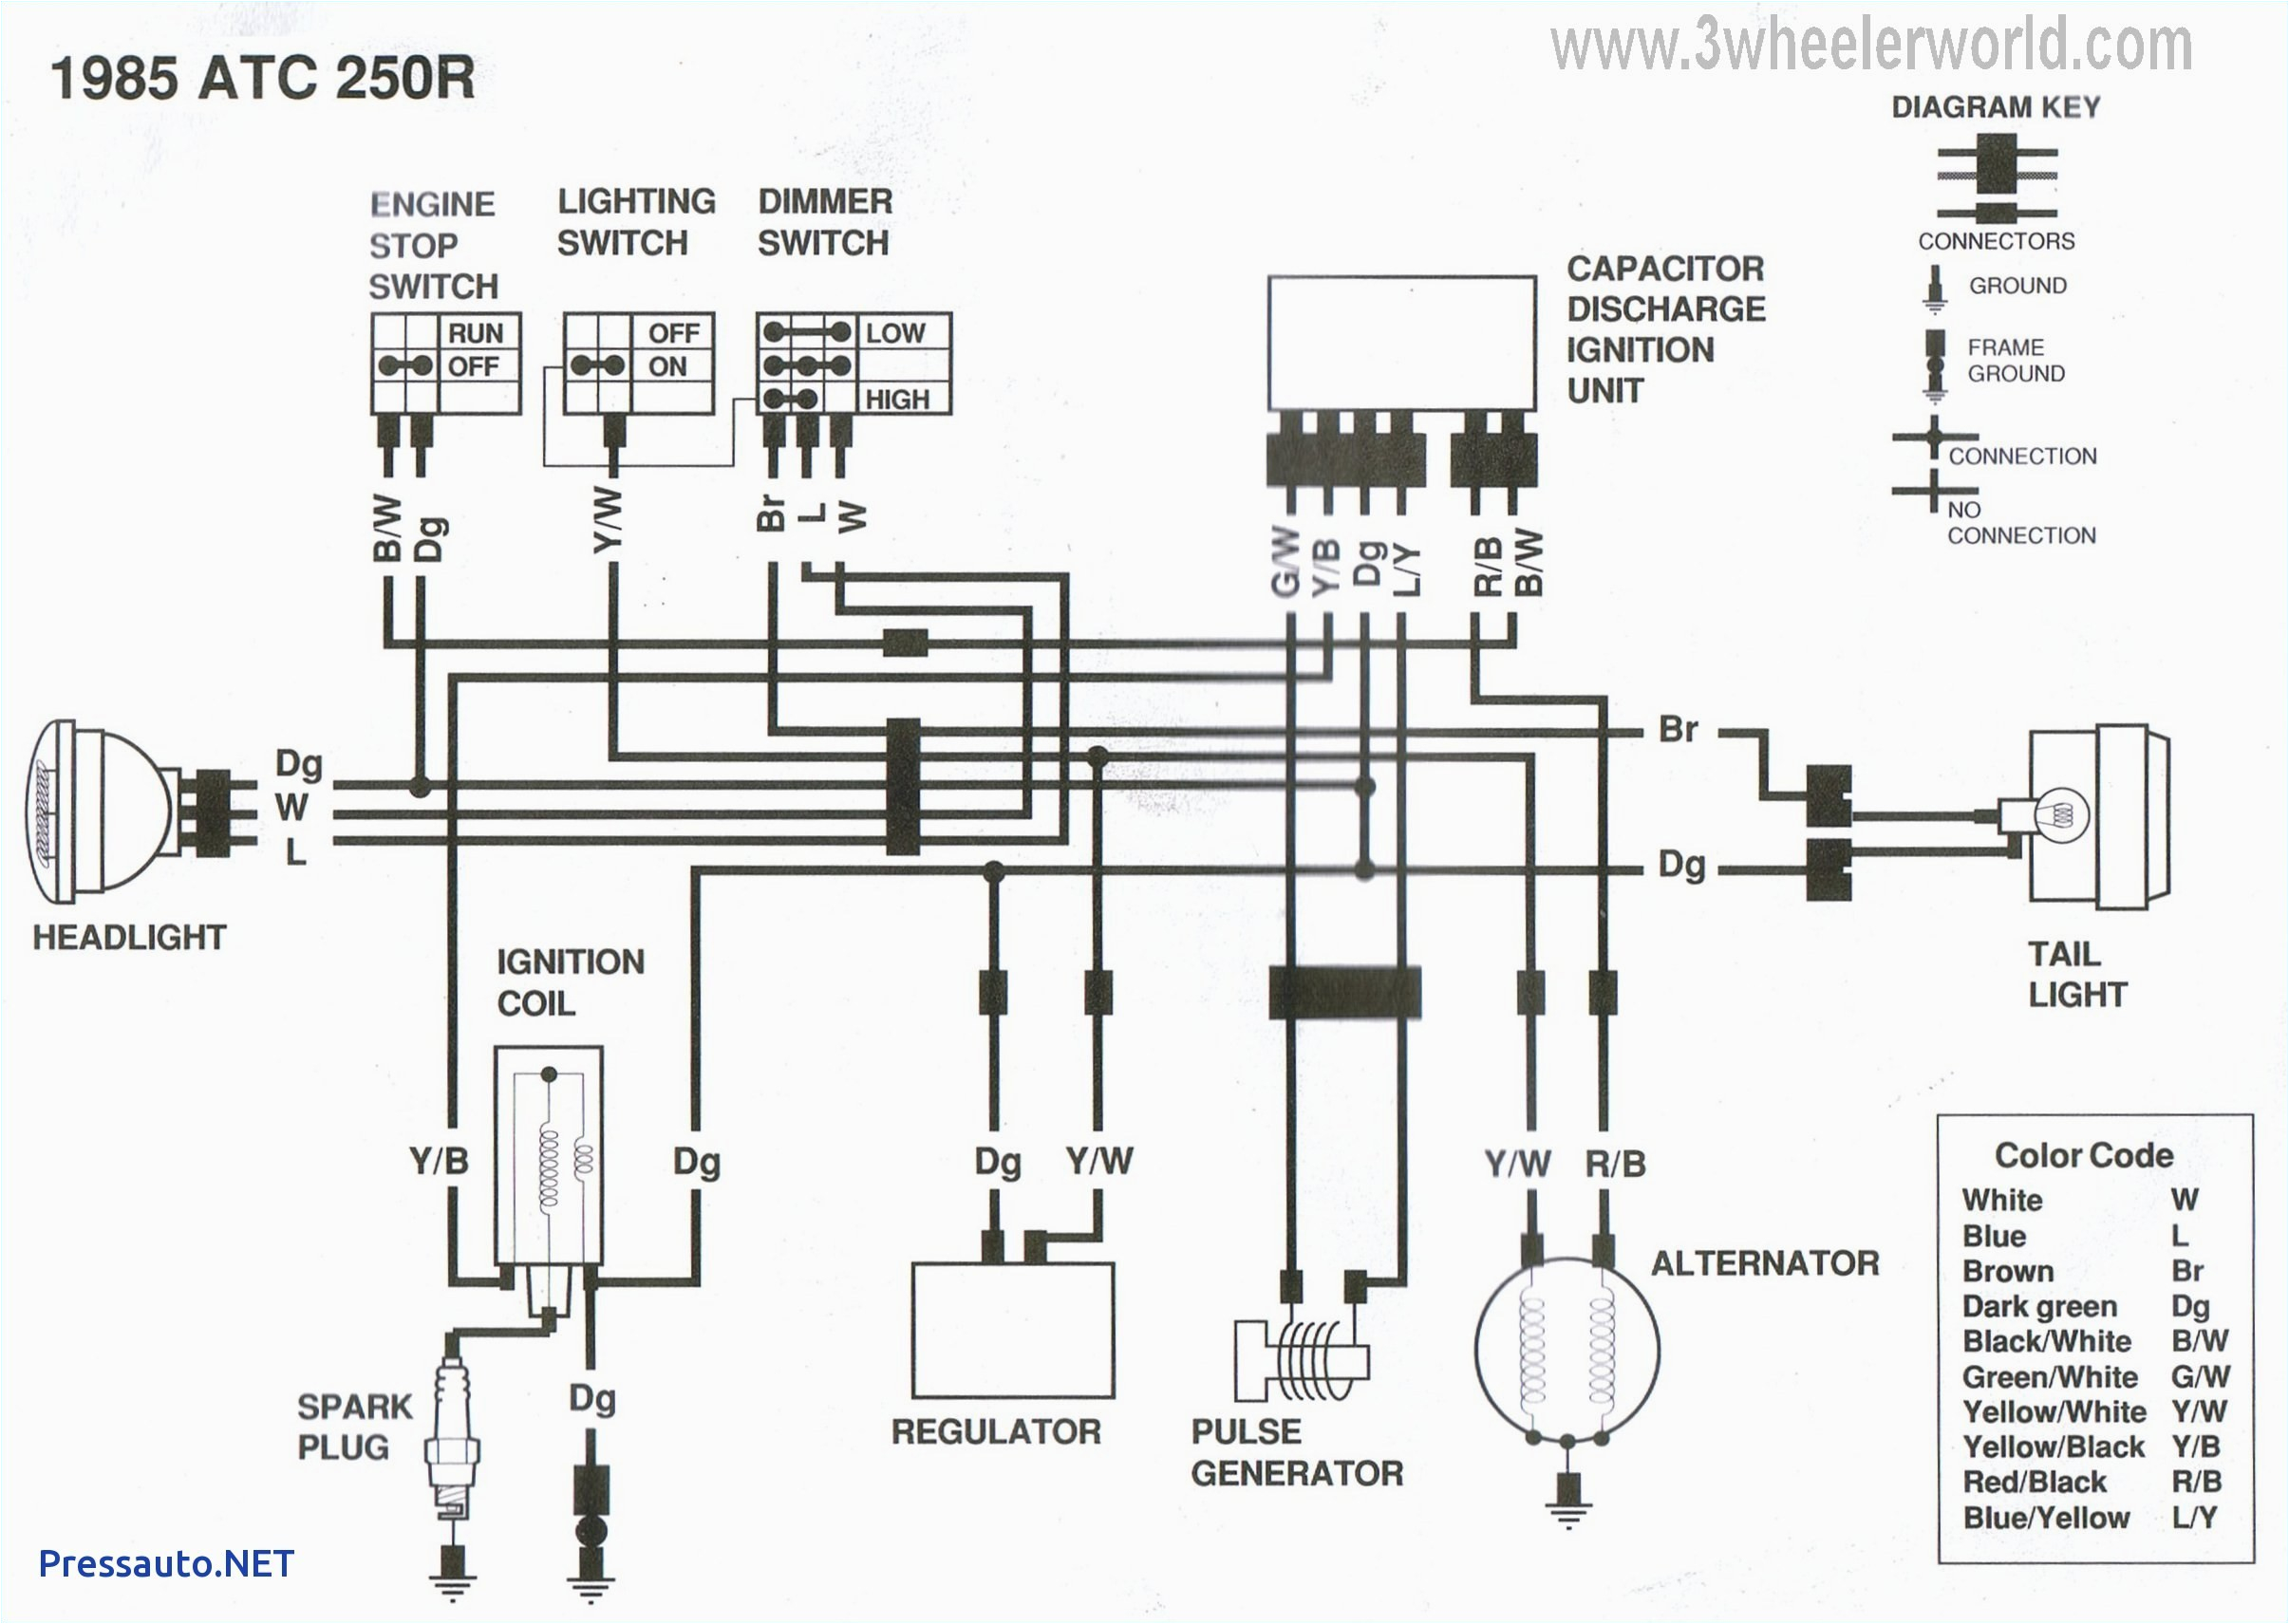 xs750 wiring diagram manual e book yamaha xs750 wiring diagram yamaha xs750 wiring diagram